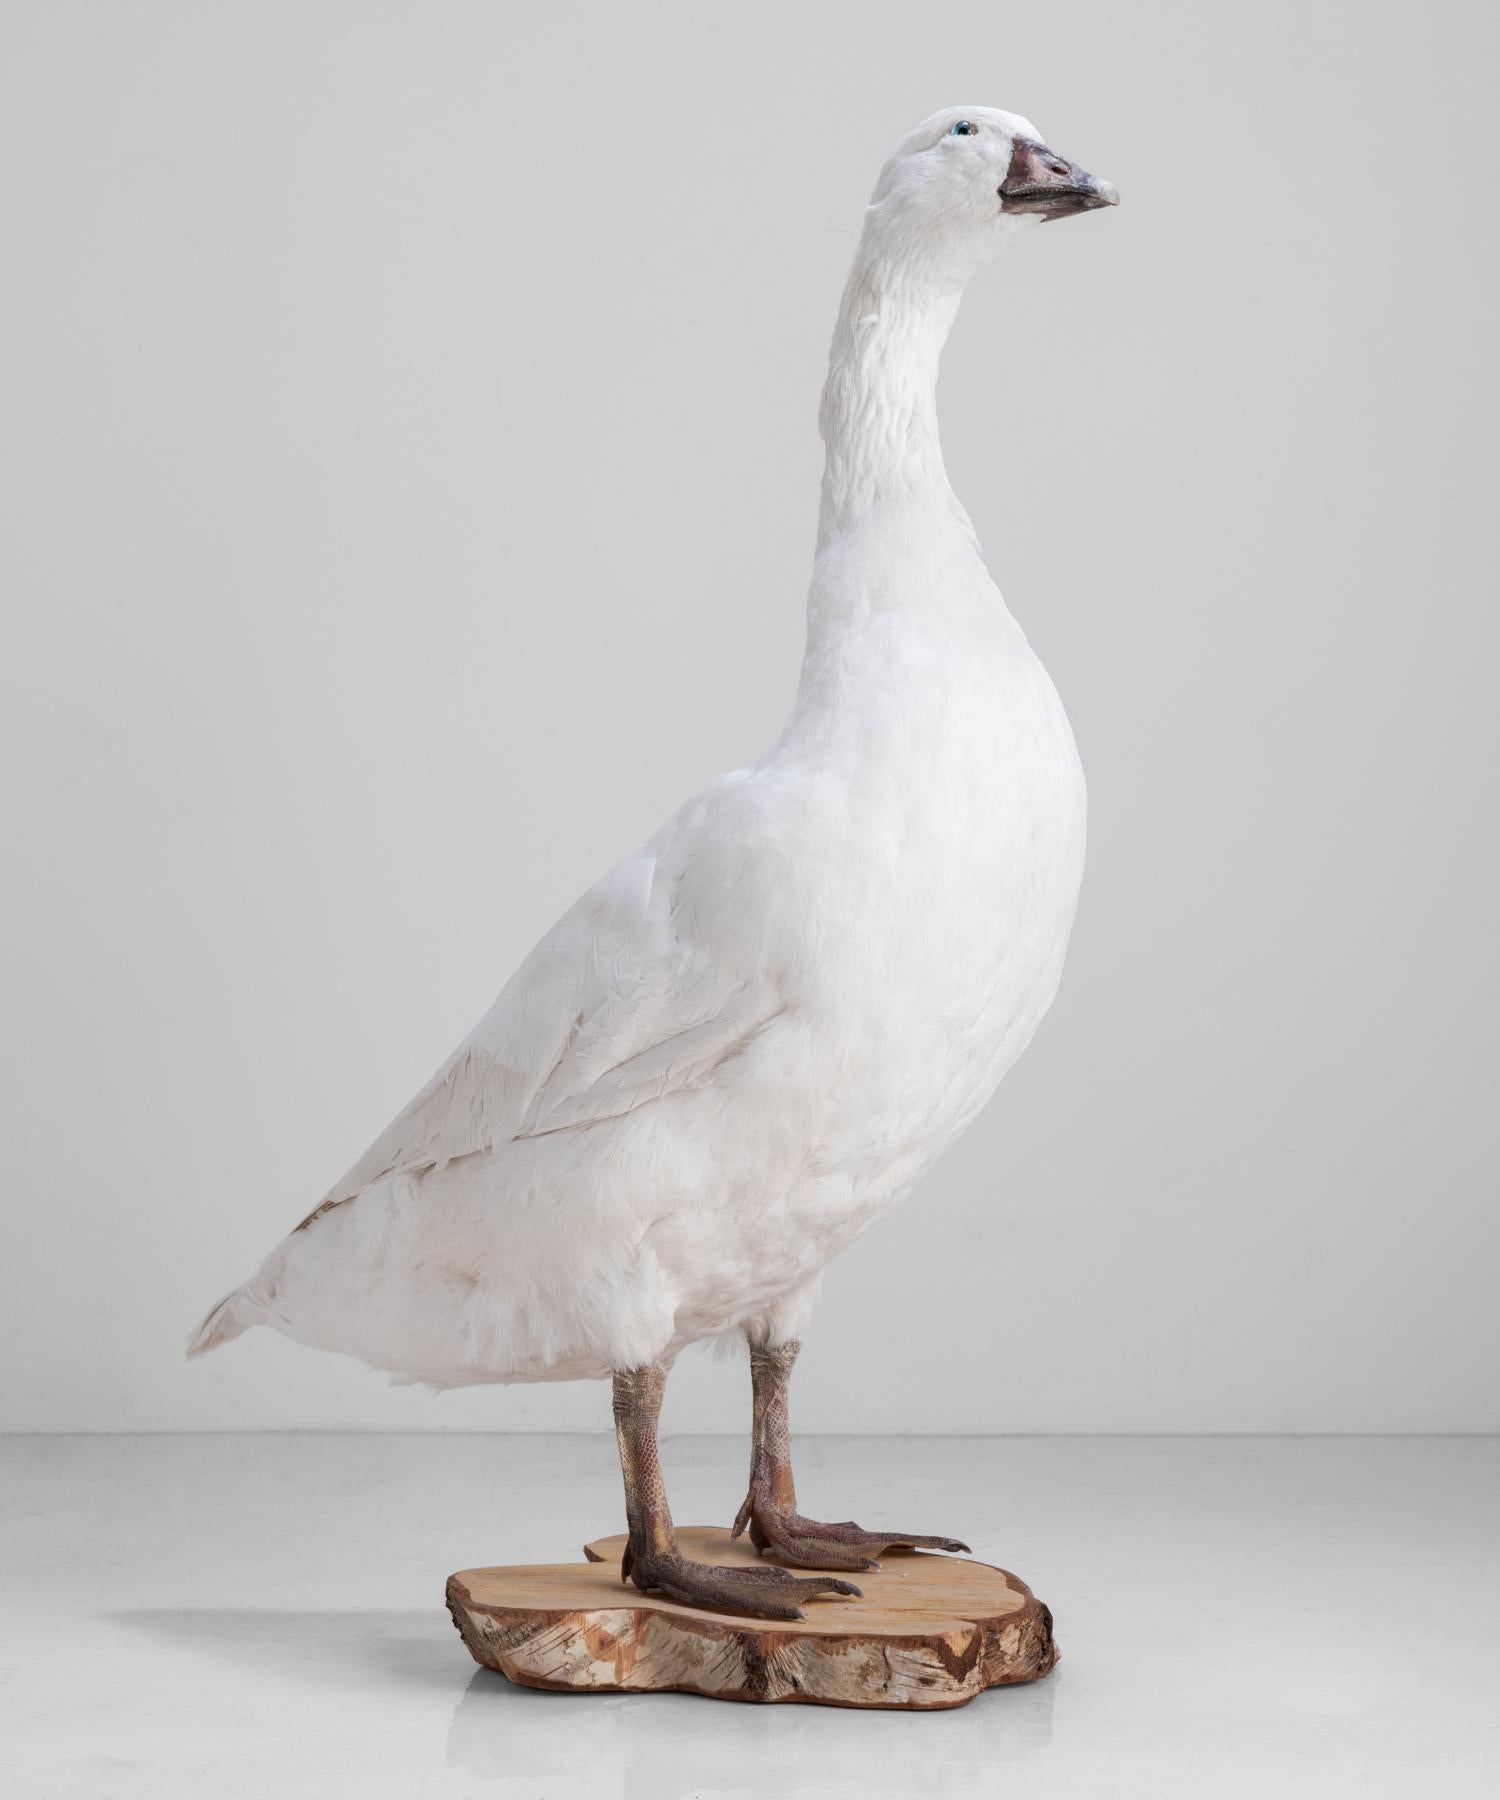 Snow white goose taxidermy, circa 1950.

Elegant goose with white plumage, mounted on decorative log base.